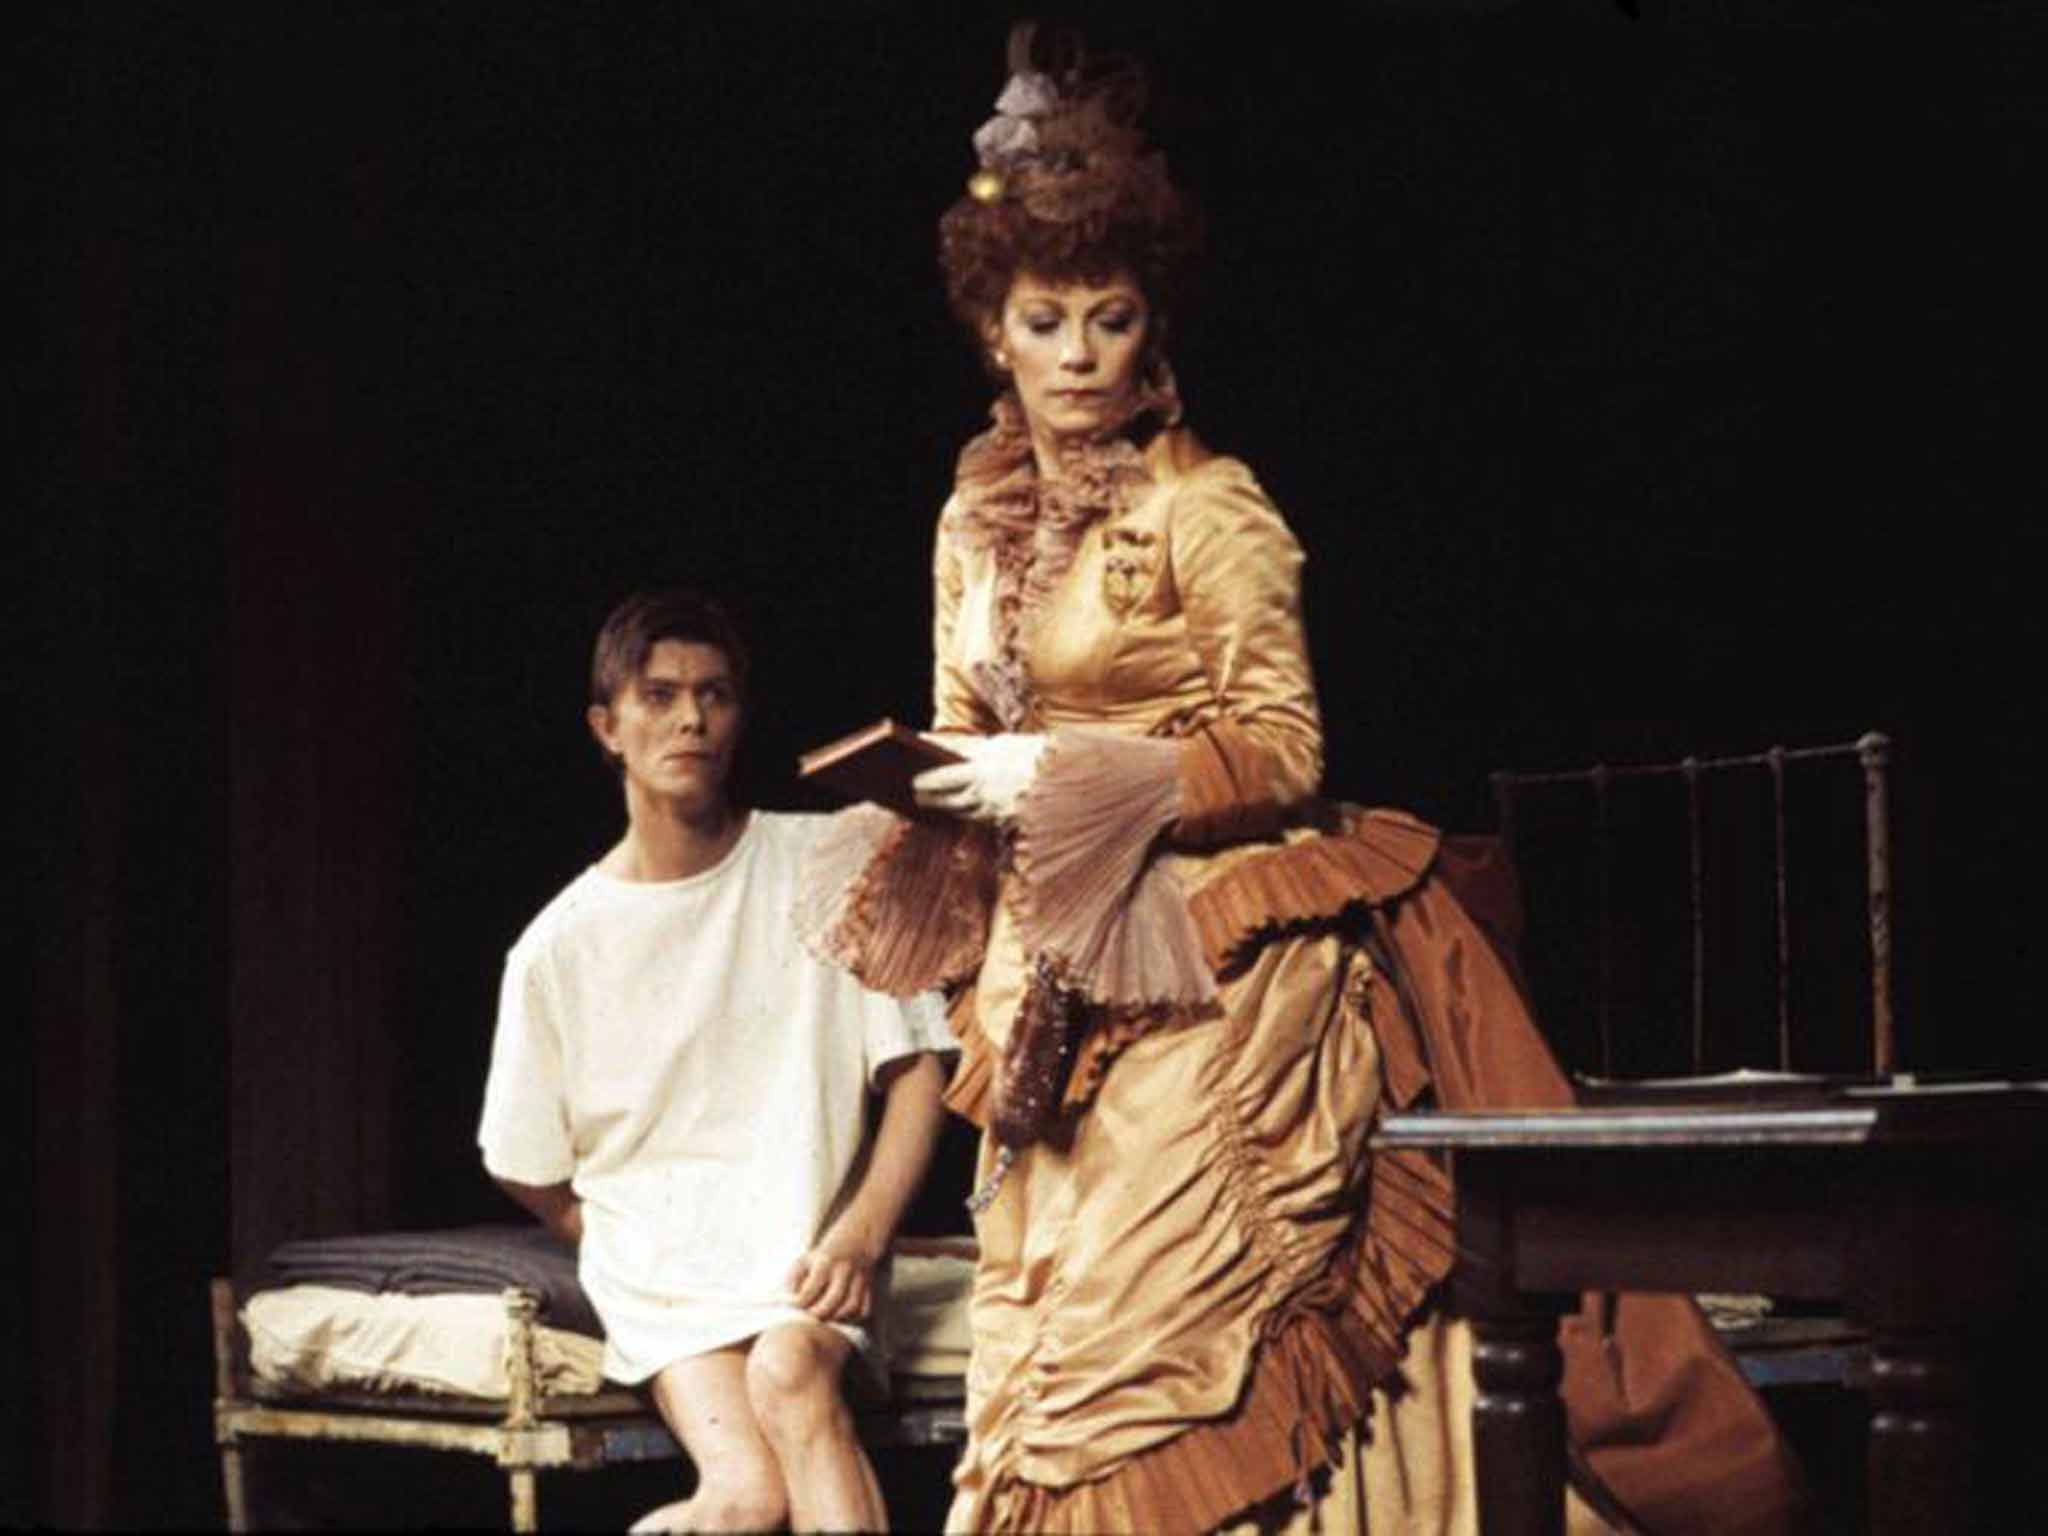 Elliott in rehearsal with David Bowie in 'Elephant Man' in New York in 1980